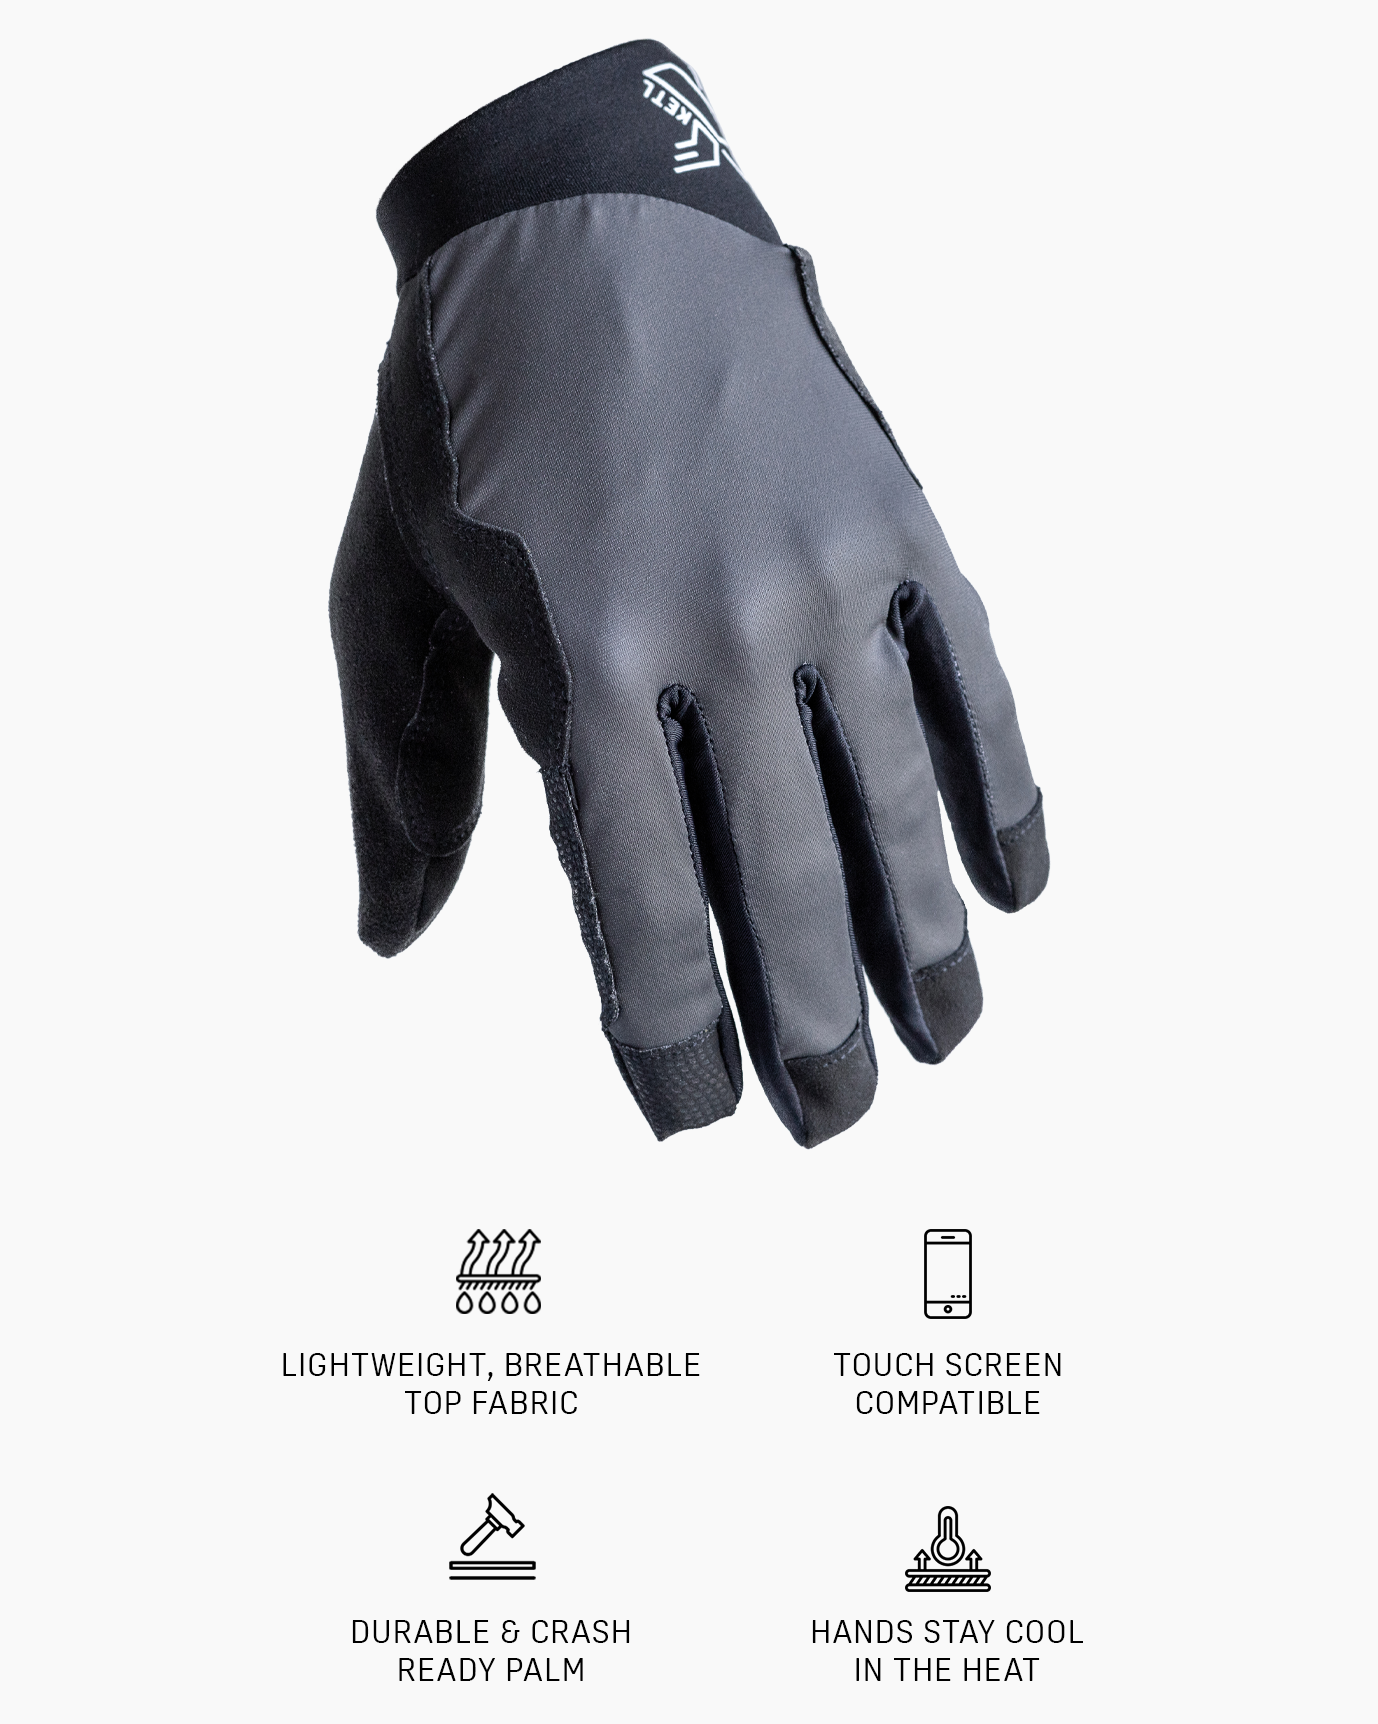 KETL Glove Features